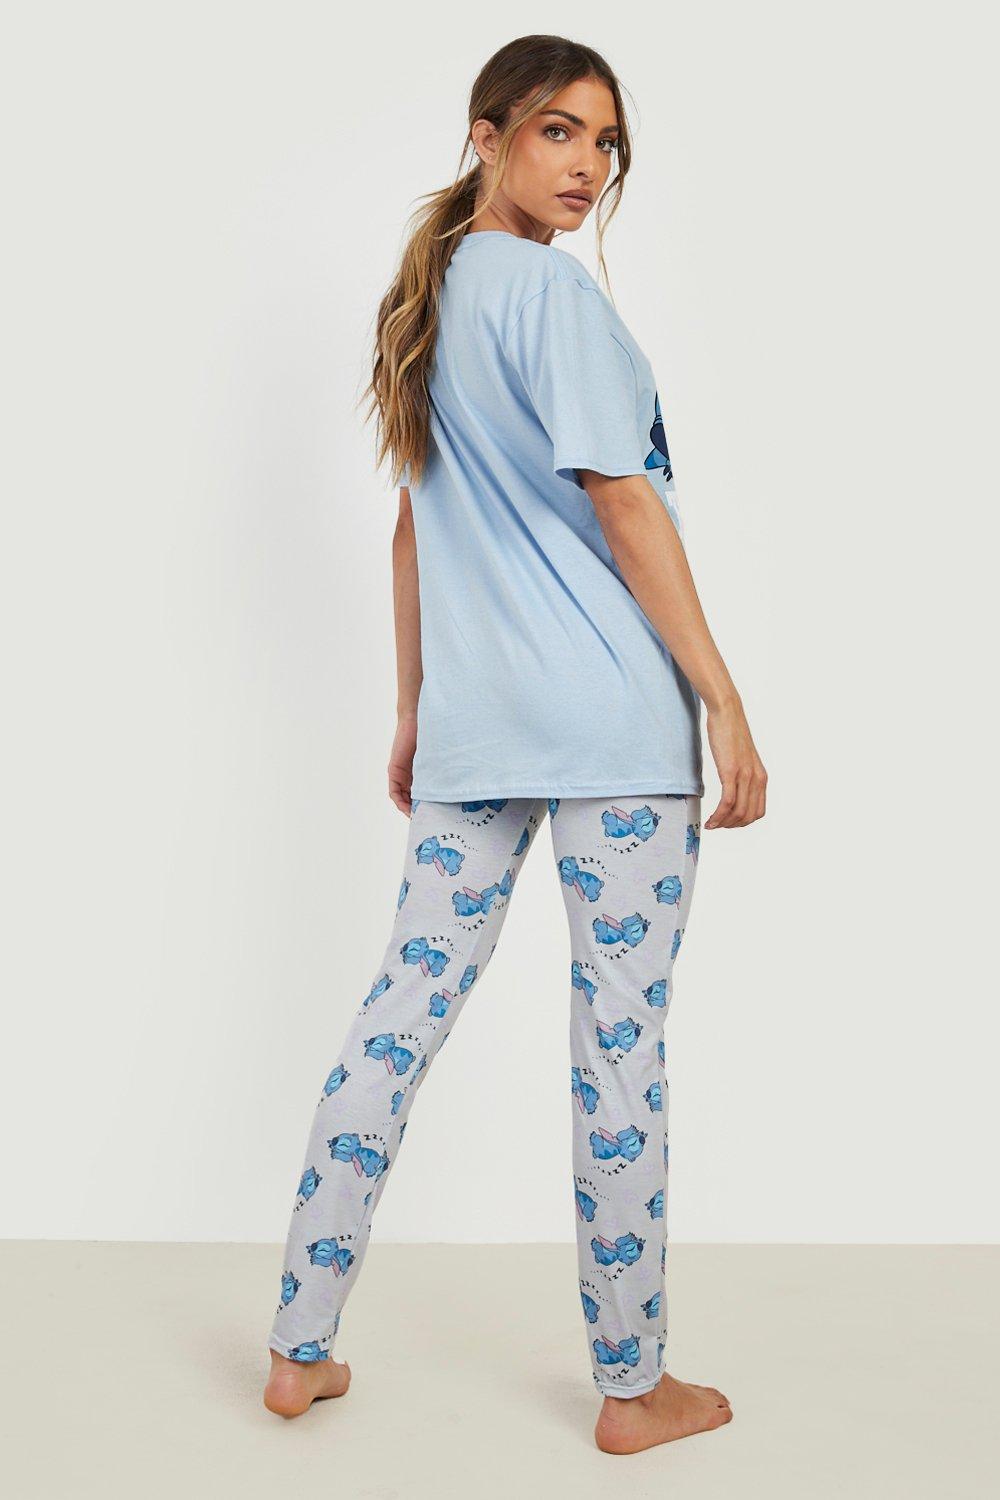 Disney Lilo & Stitch Pyjama T-shirt & Legging Set